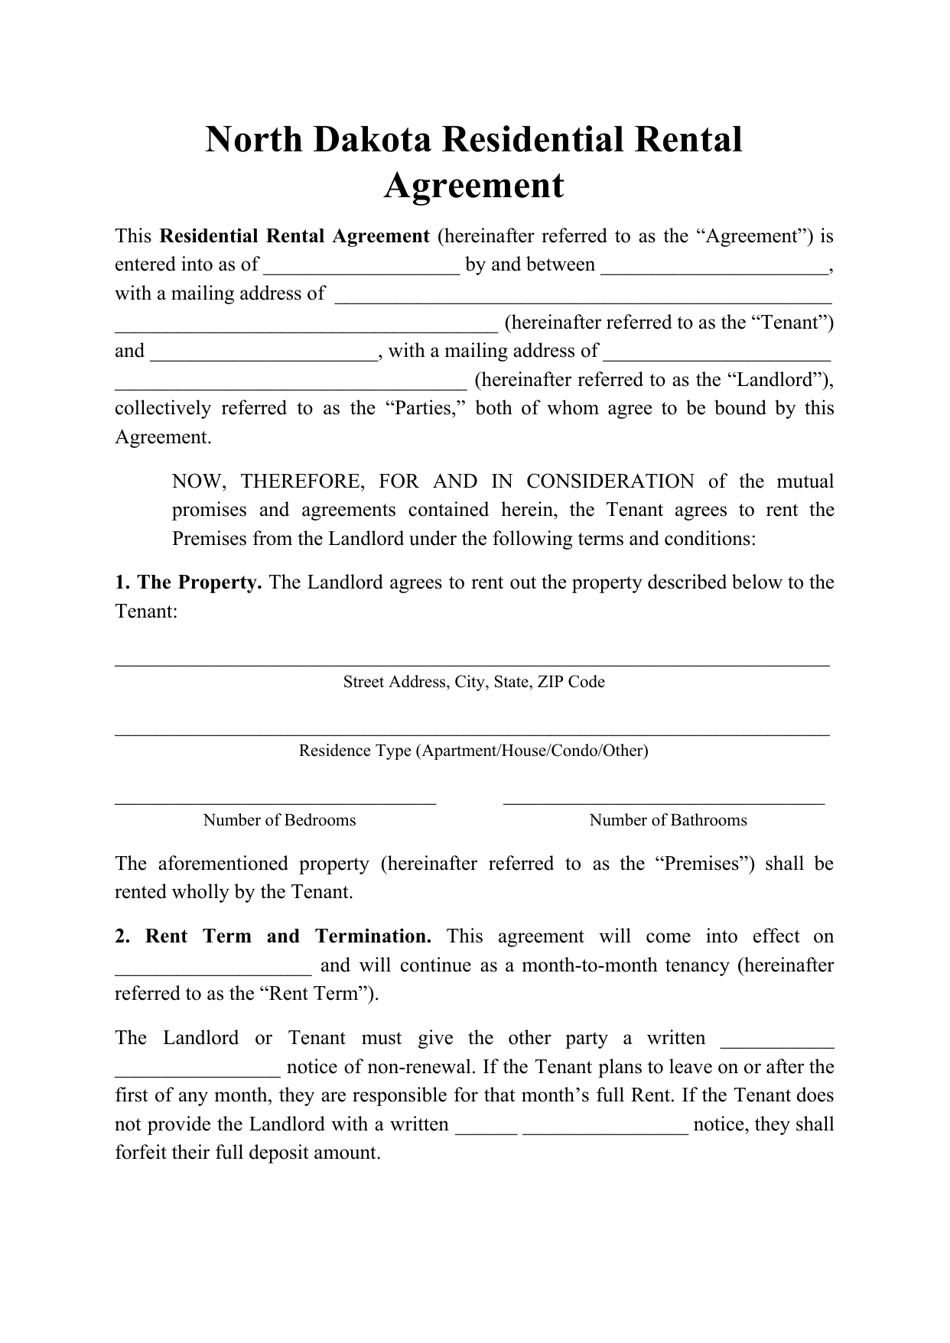 Residential Rental Agreement Template - North Dakota, Page 1